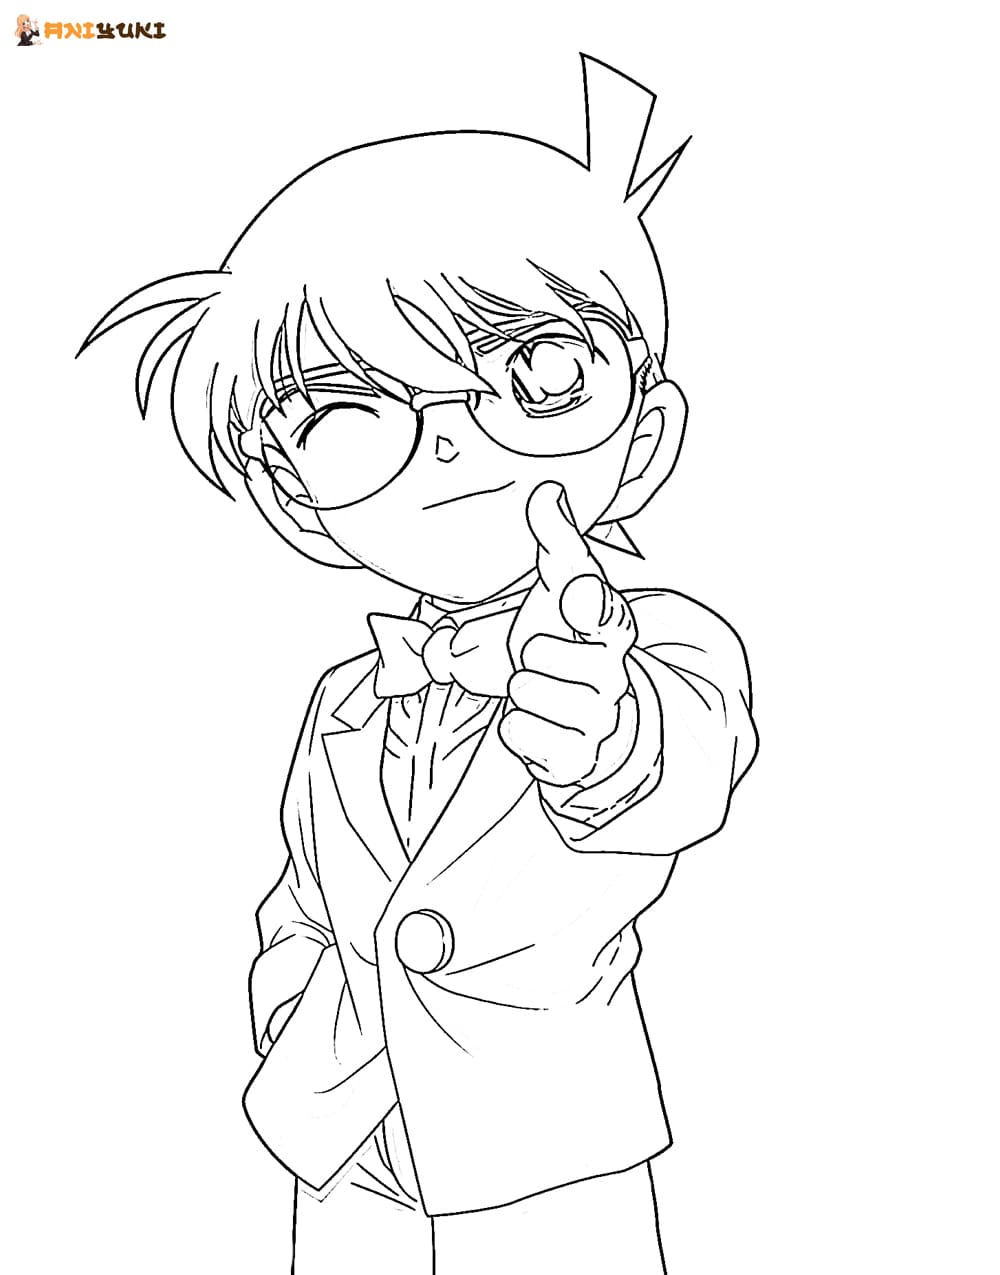 Detective Conan coloring pages - AniYuki - Anime Portal